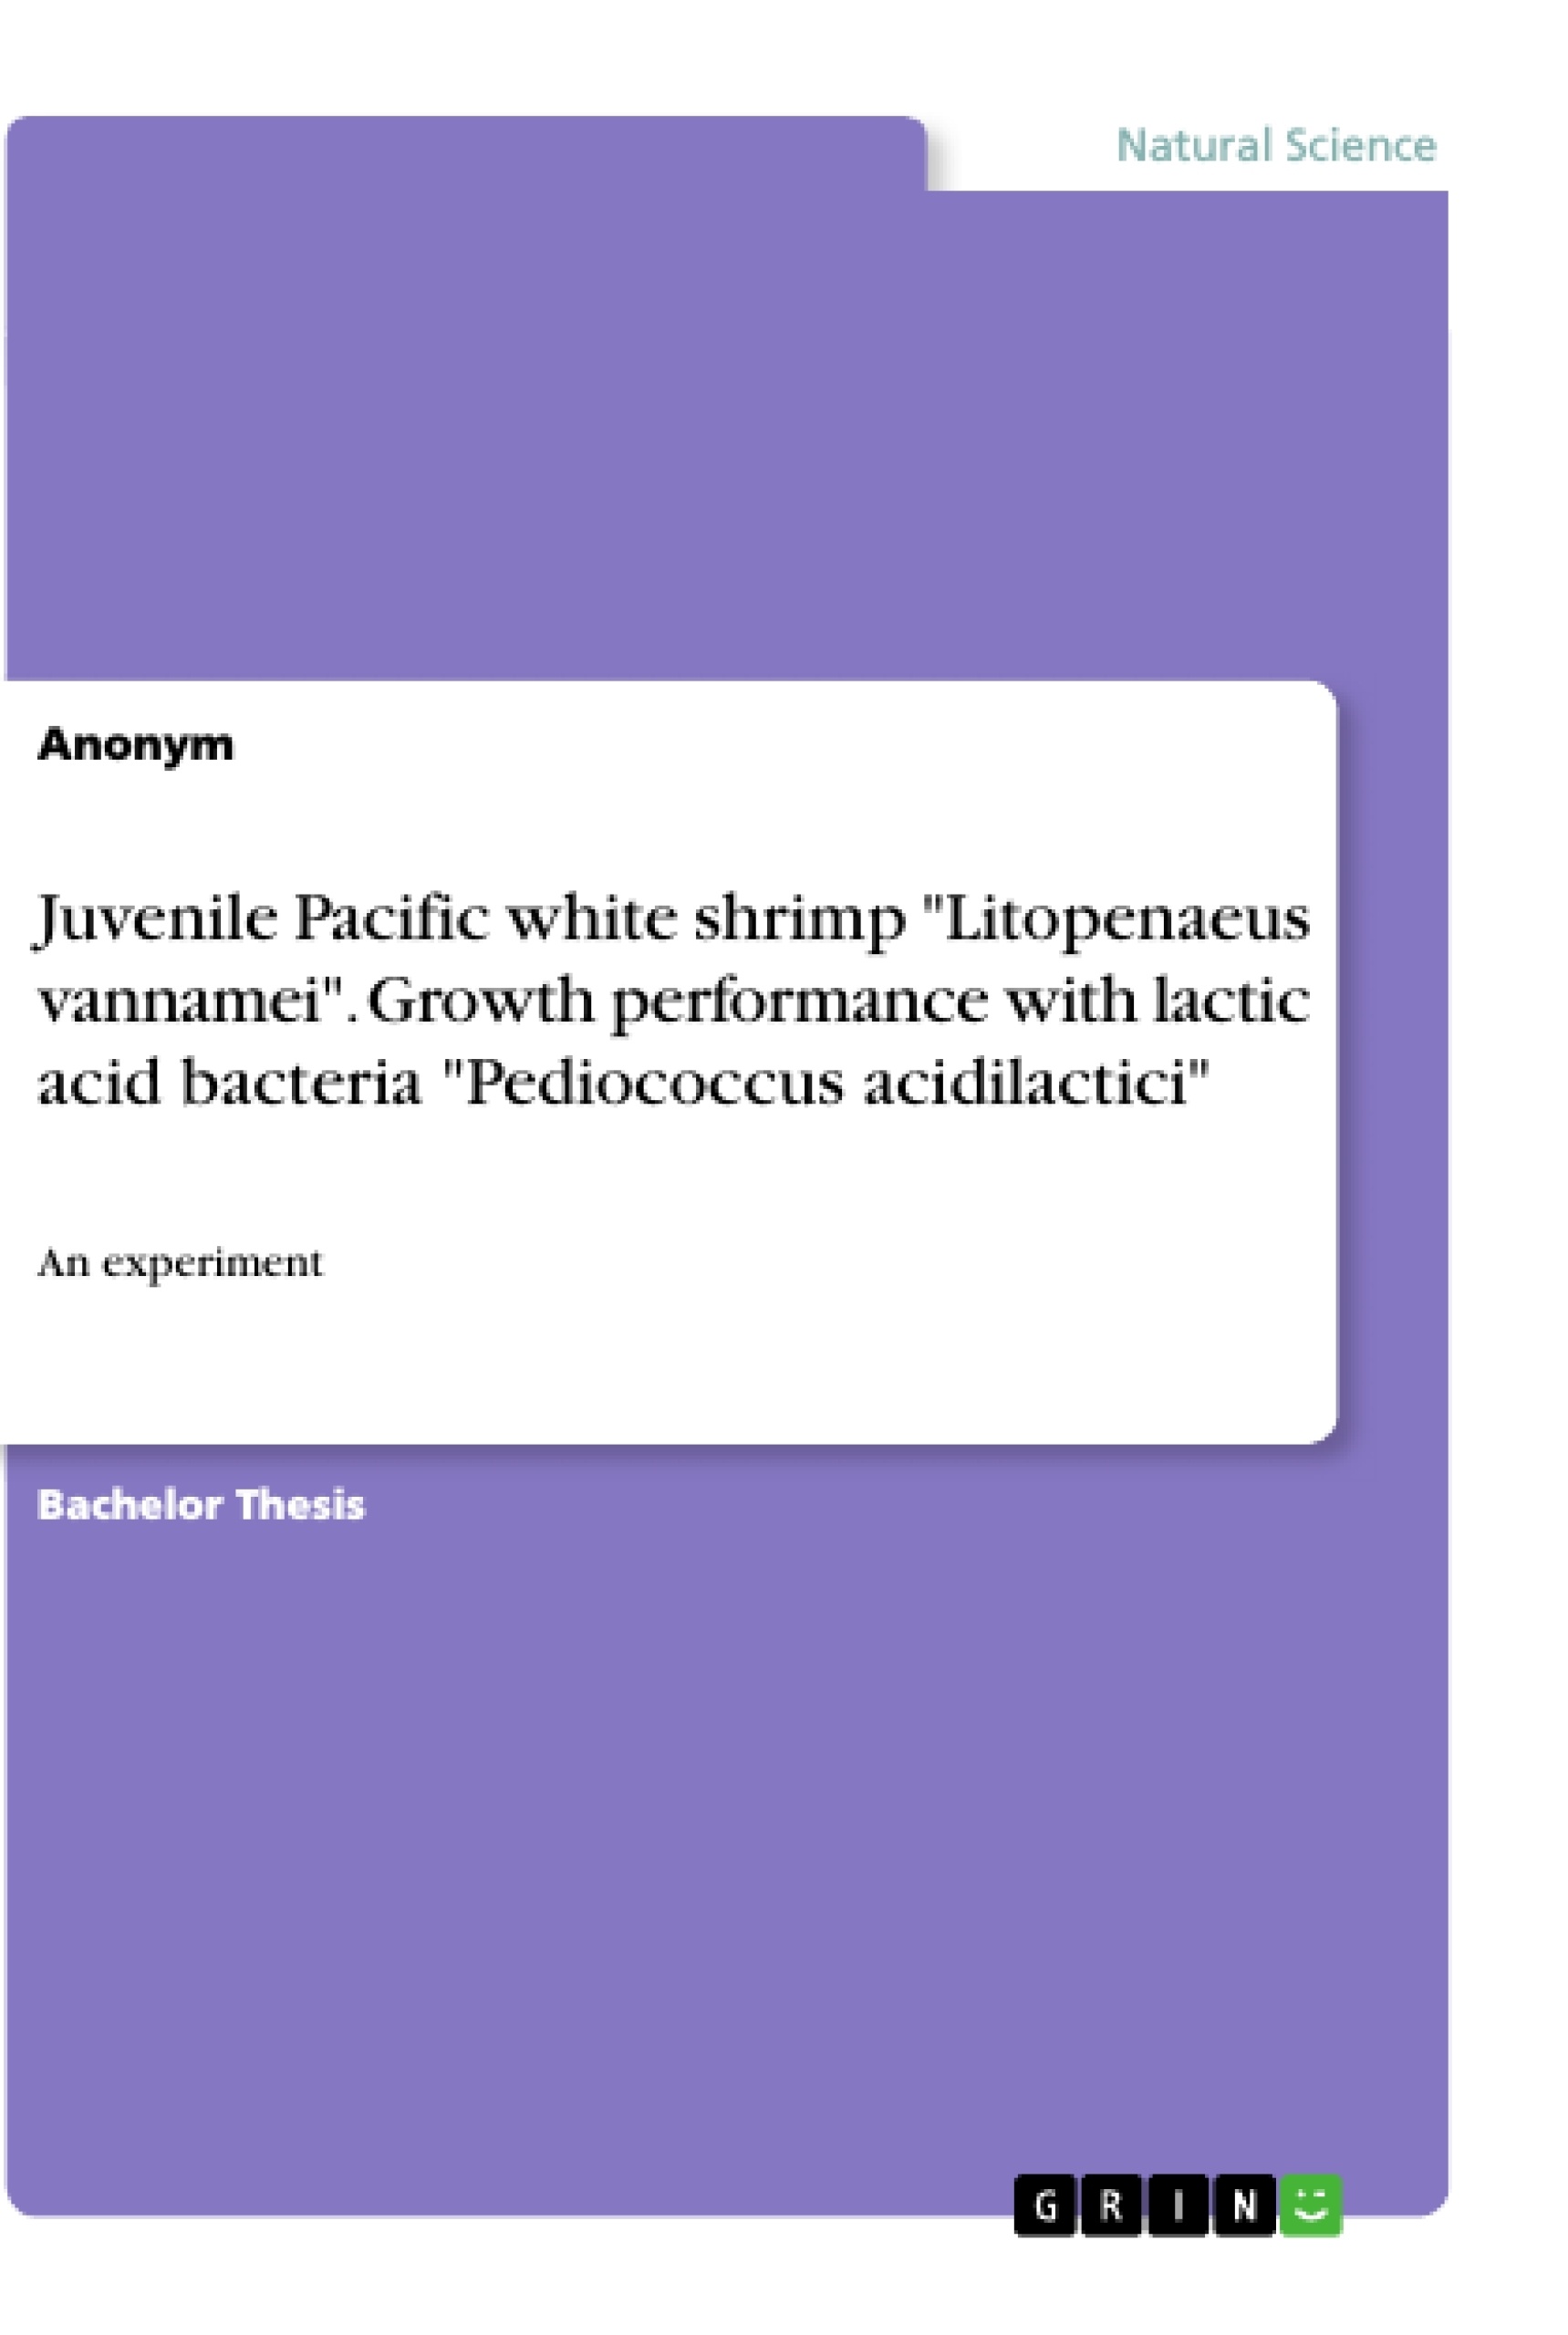 Title: Juvenile Pacific white shrimp "Litopenaeus vannamei". Growth performance with lactic acid bacteria "Pediococcus acidilactici"